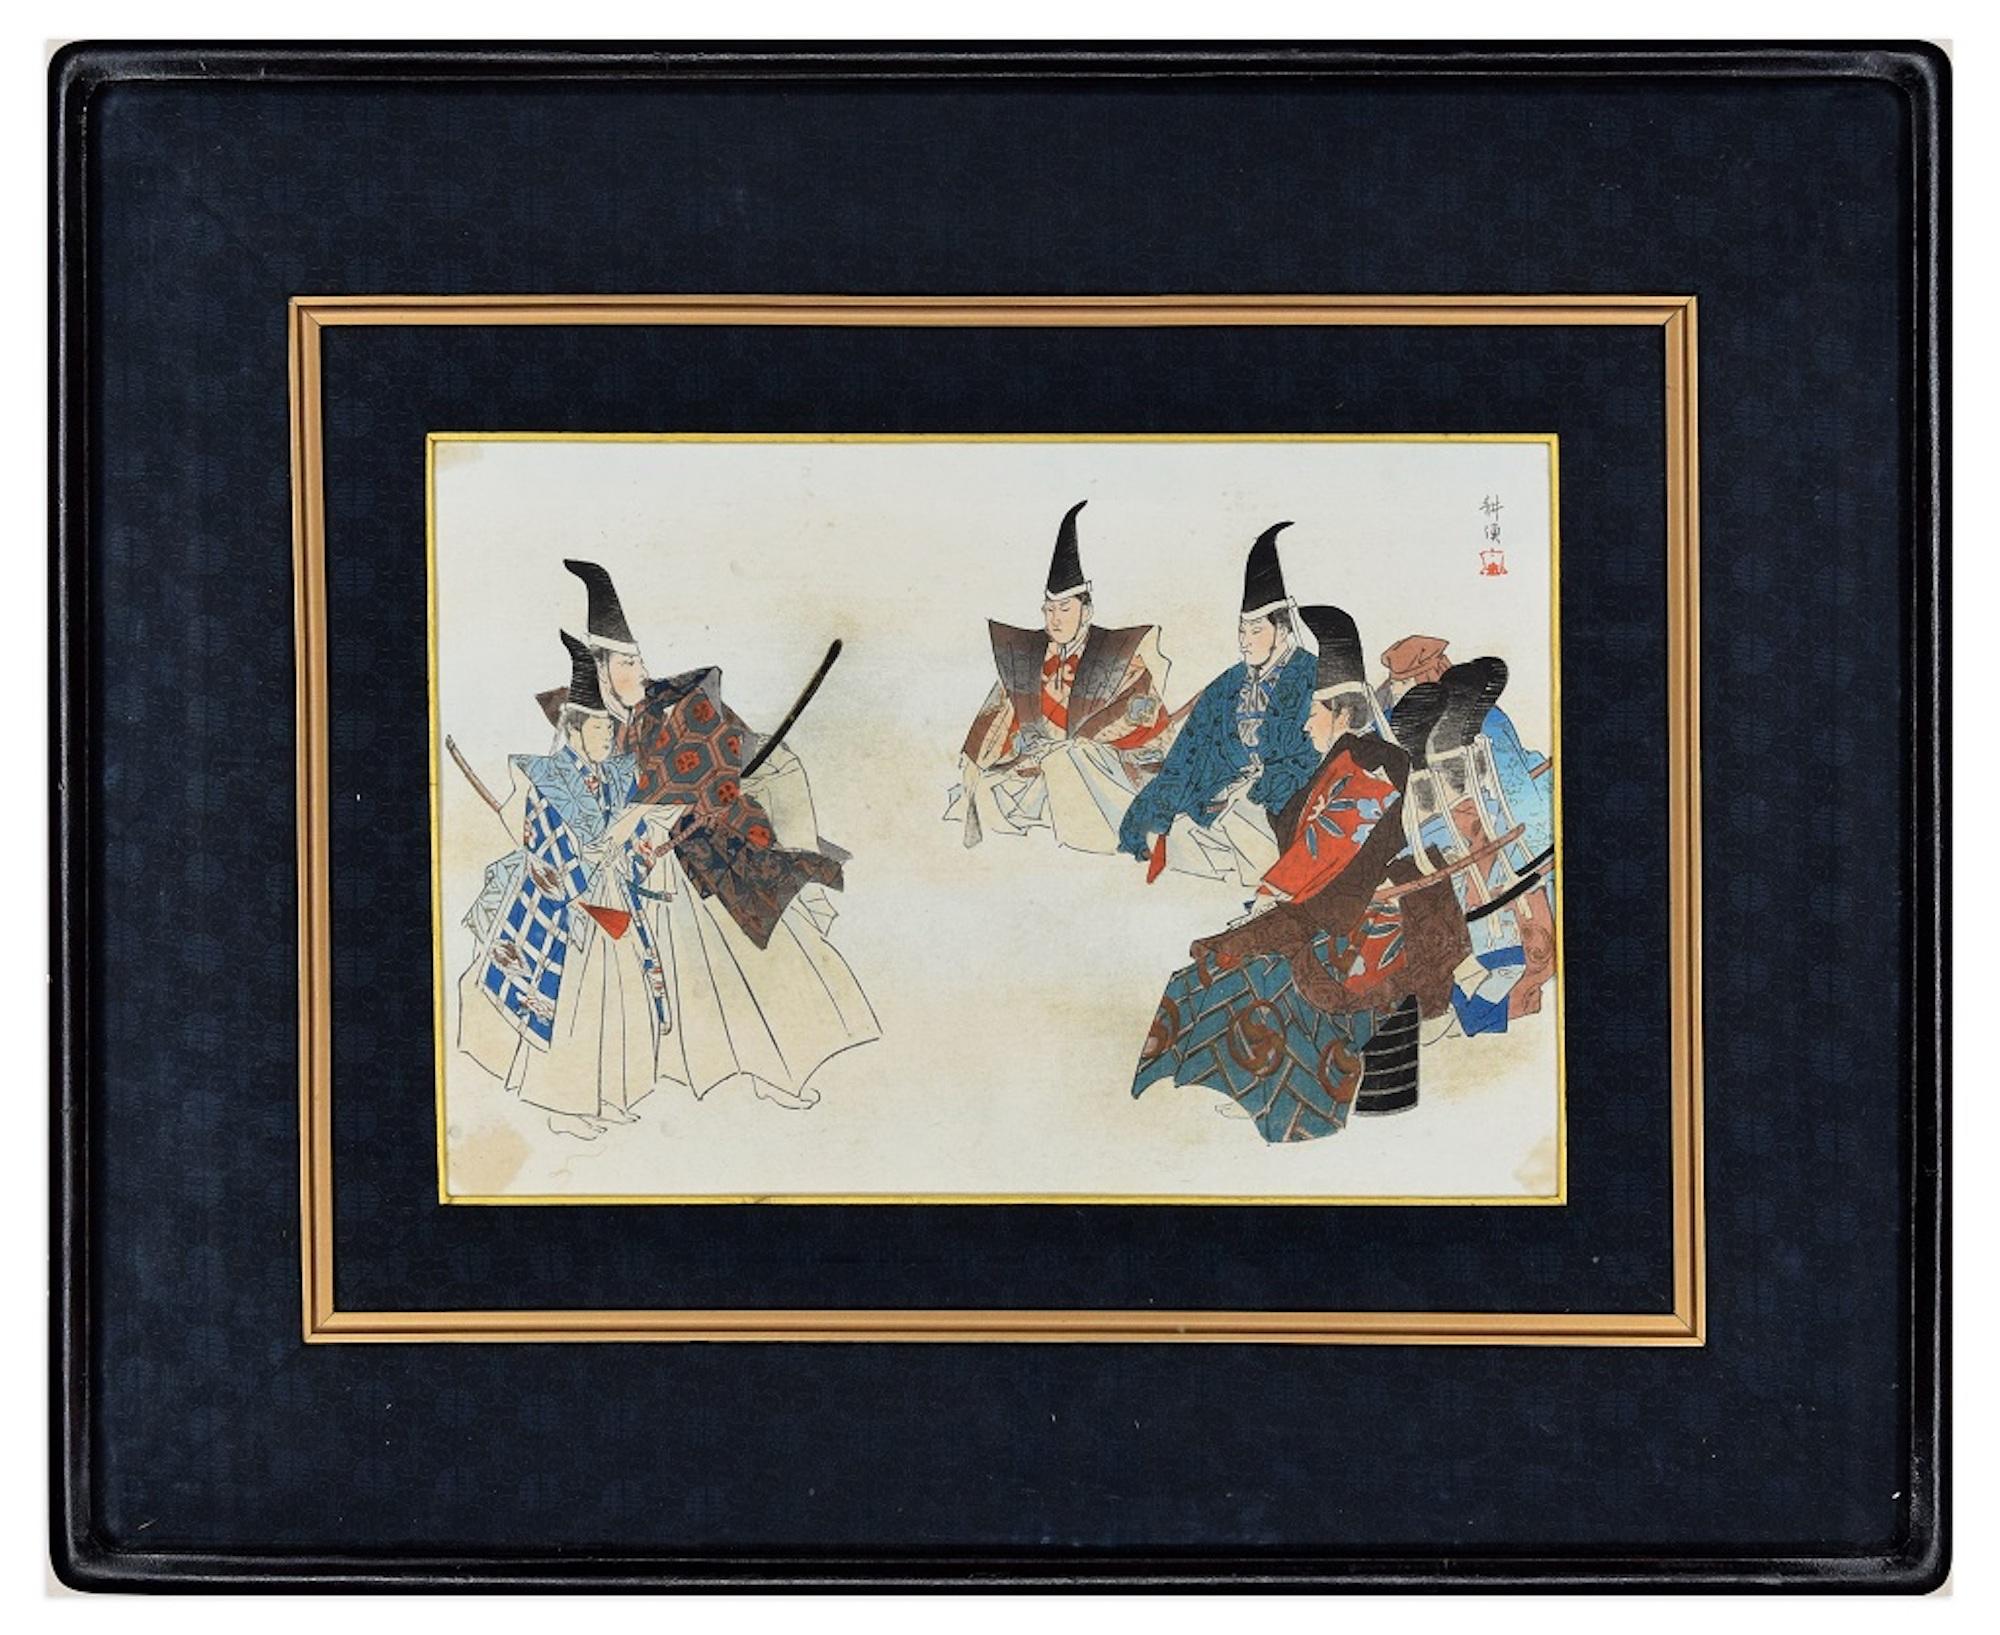 Samurai - Original Woodcut by Japanese Master 19th Century - Print by Unknown